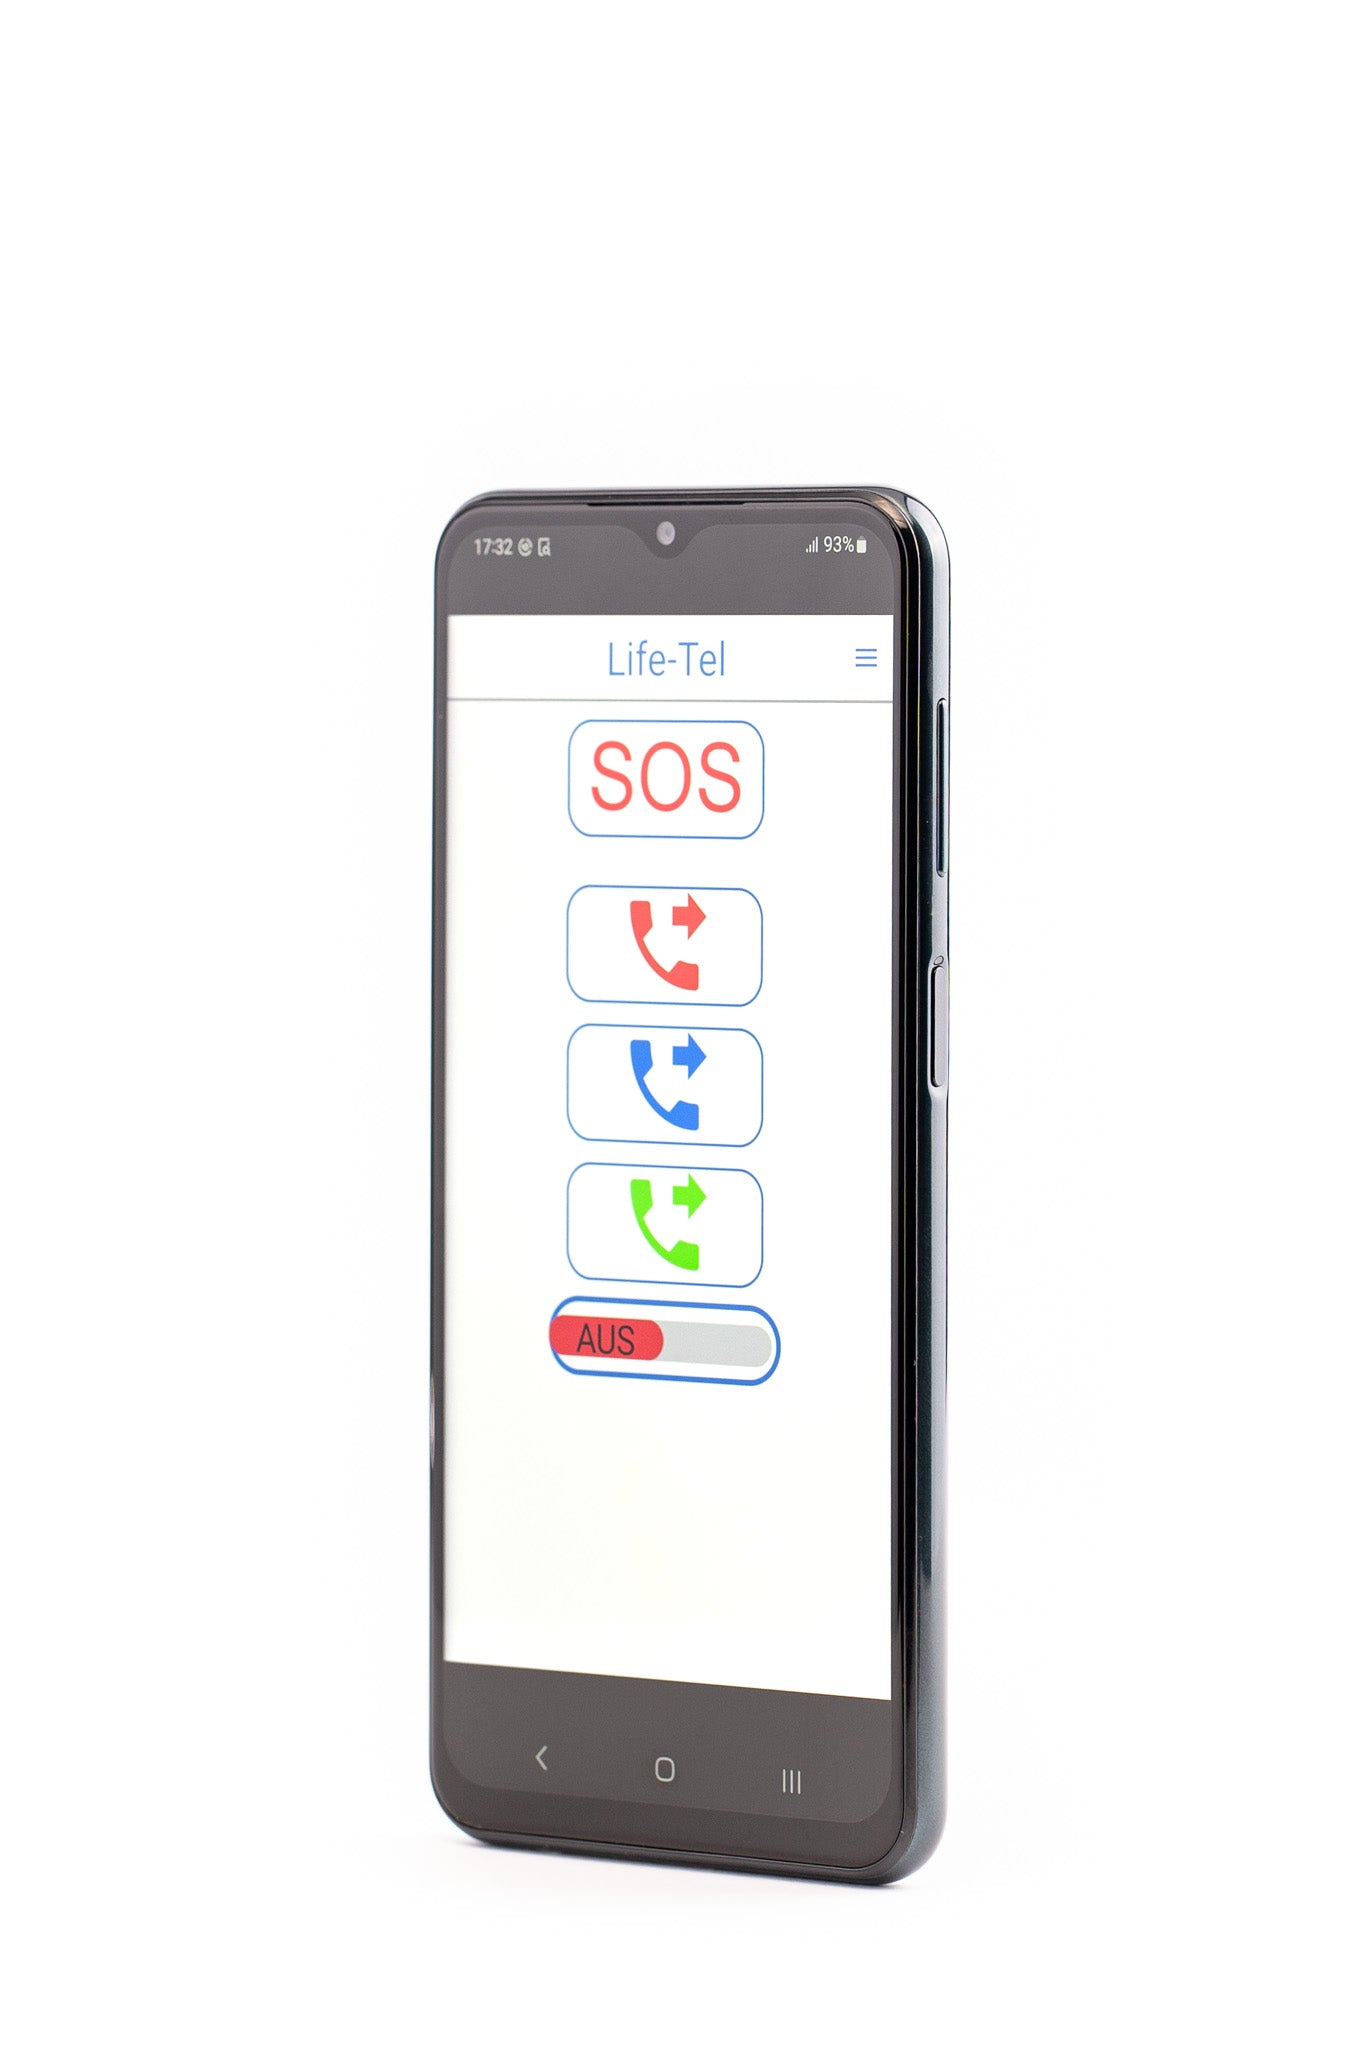 Life Tel 7 L - 5G smarttelefon som personlig nødsignalsystem for alenearbeid inkludert nødanropsapp